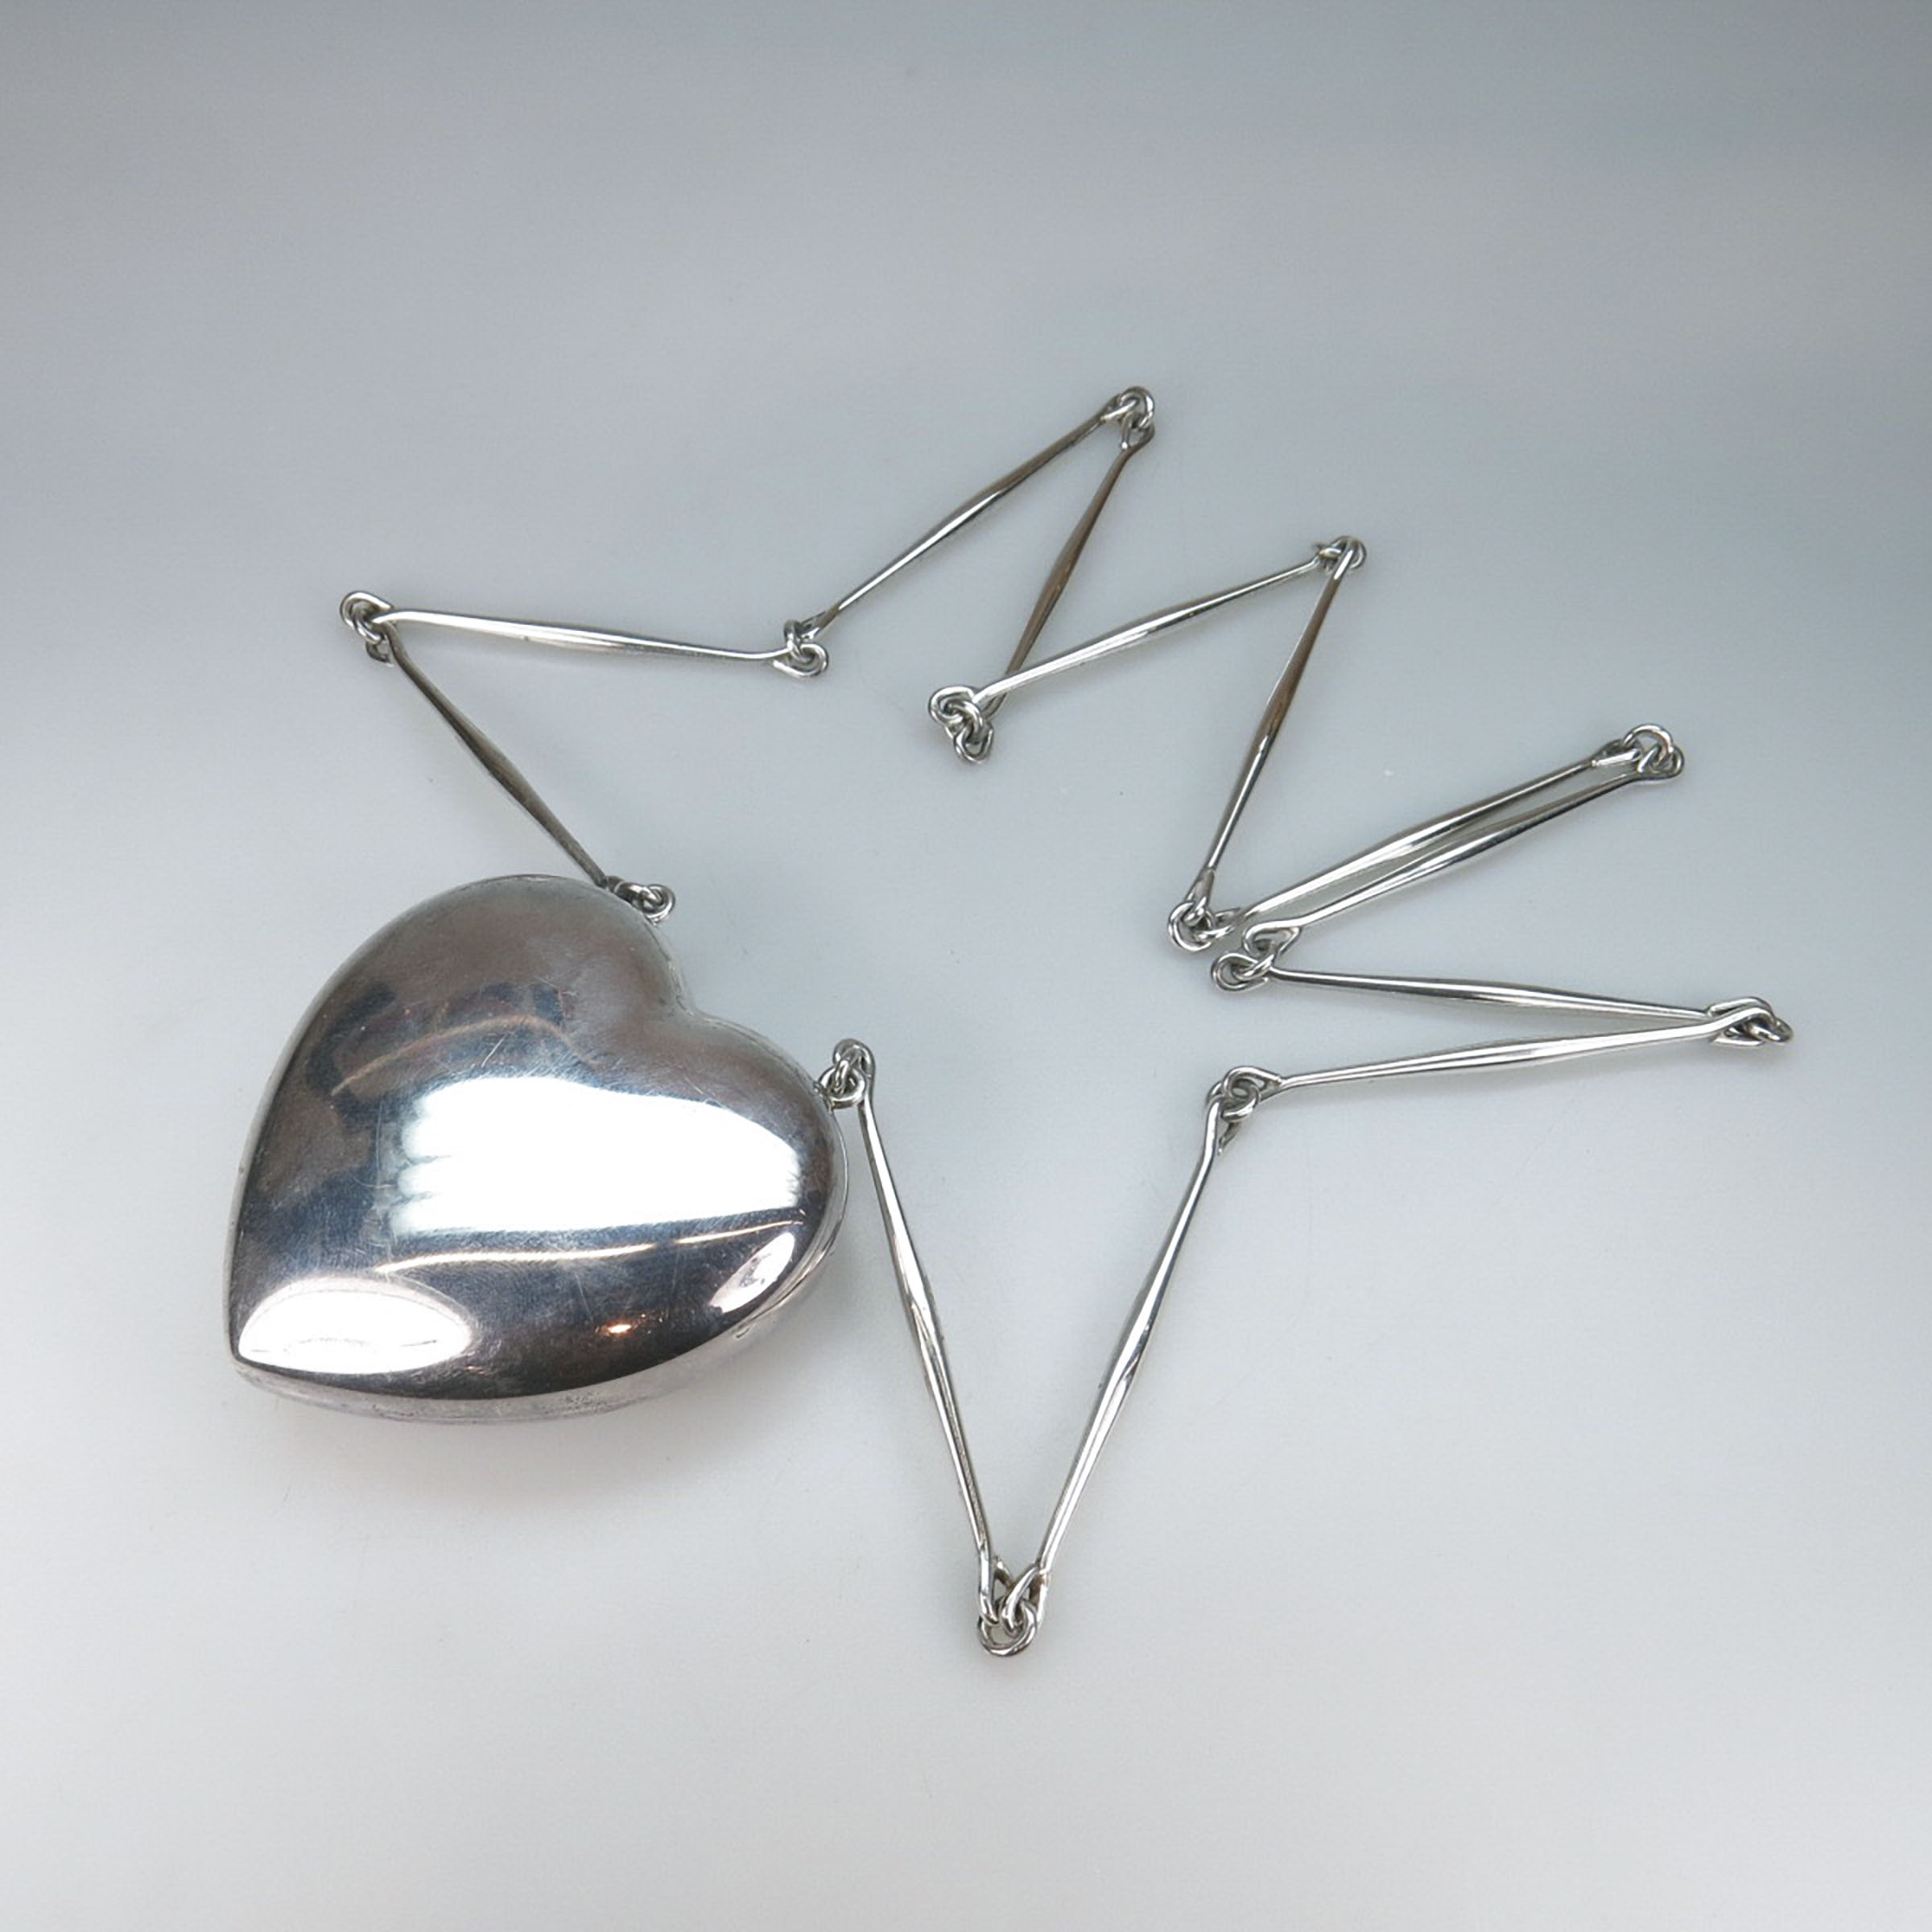 Georg Jensen Danish Sterling Silver Heart-Shaped Pendant